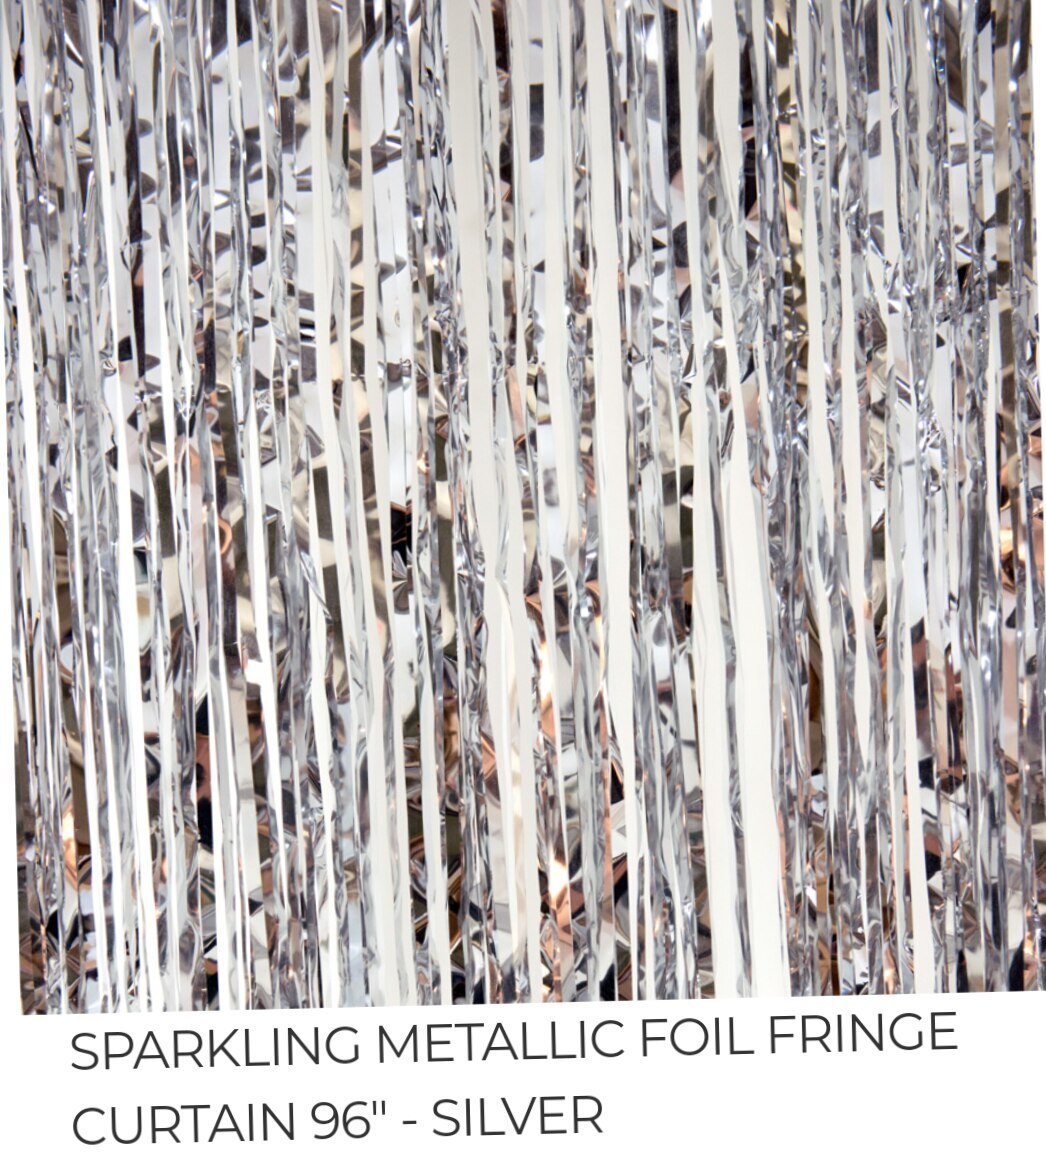 SPARKLING METALLIC FOIL FRINGE CURTAIN 96"